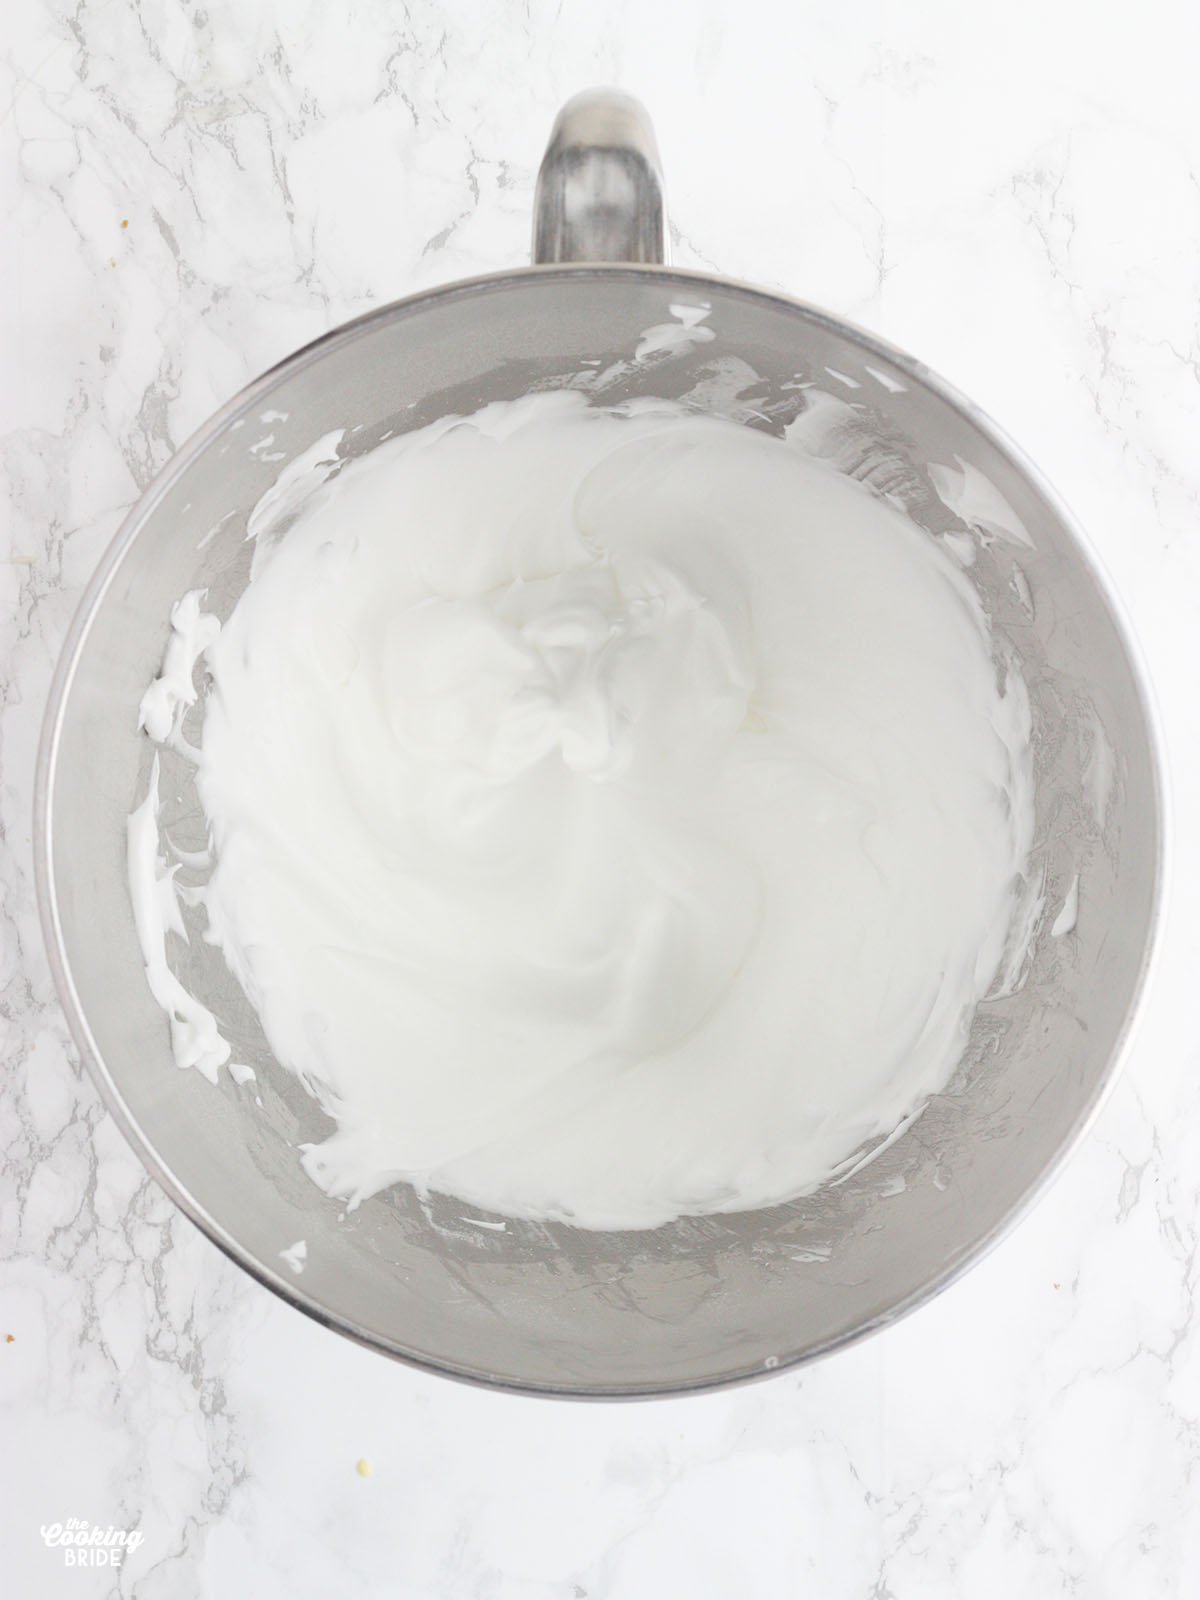 egg whites in a metal mixing bowl beaten until stiff peaks